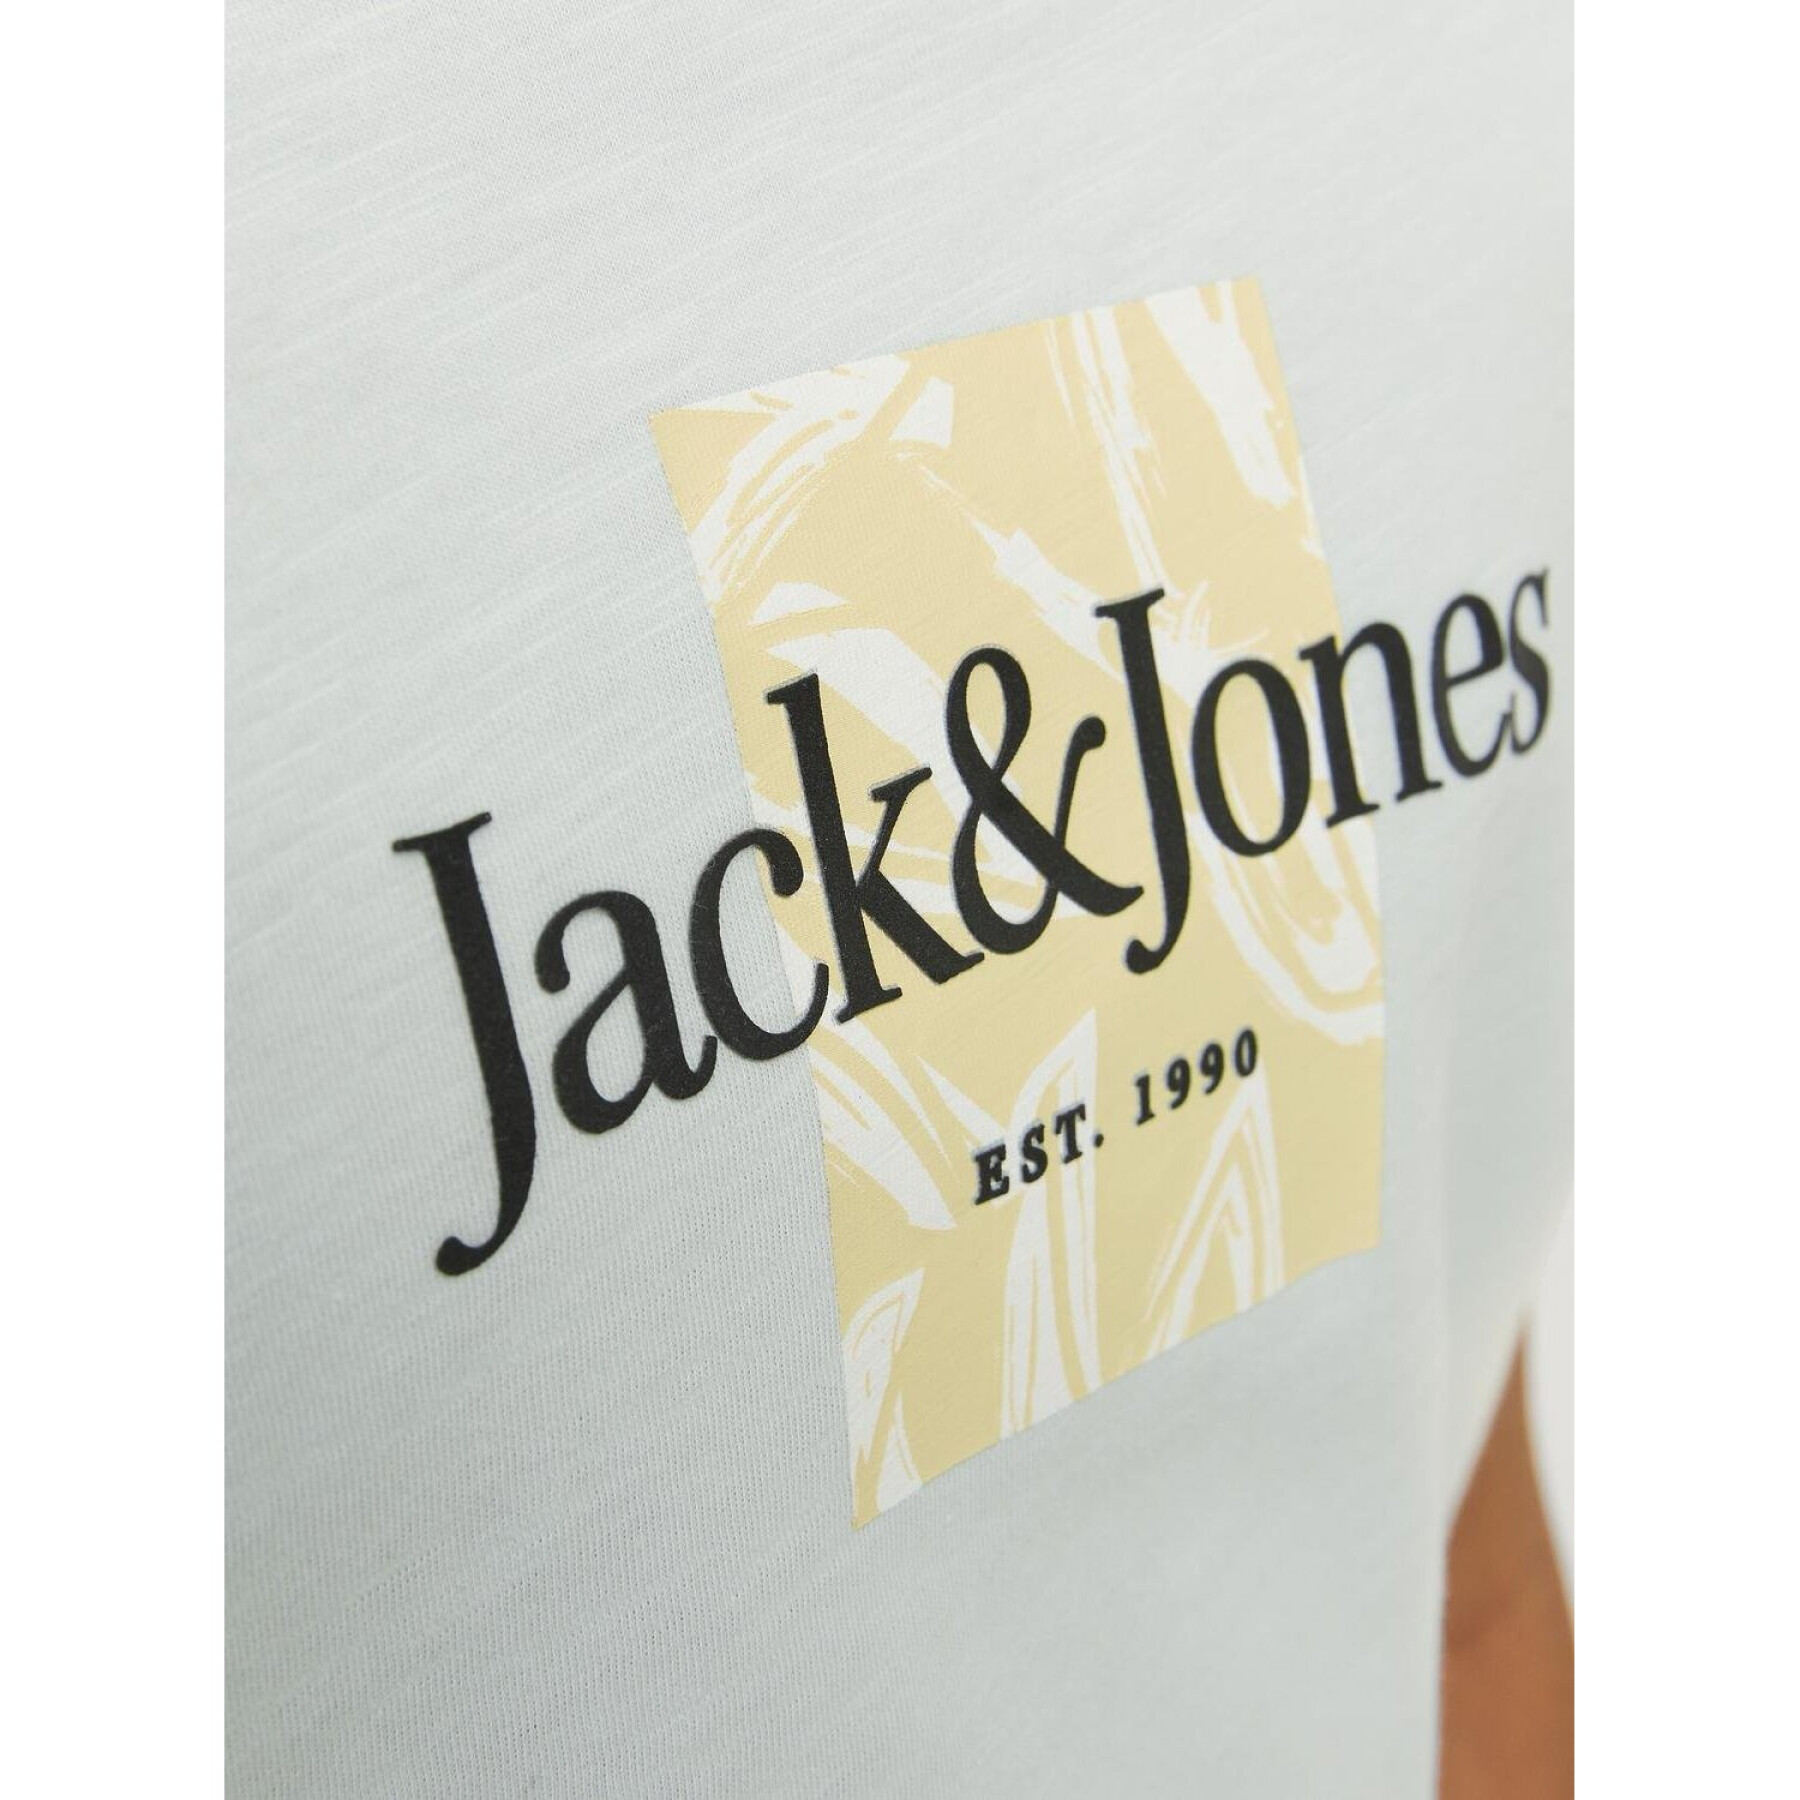 Kinder-T-shirt Jack & Jones Lafayette Branding